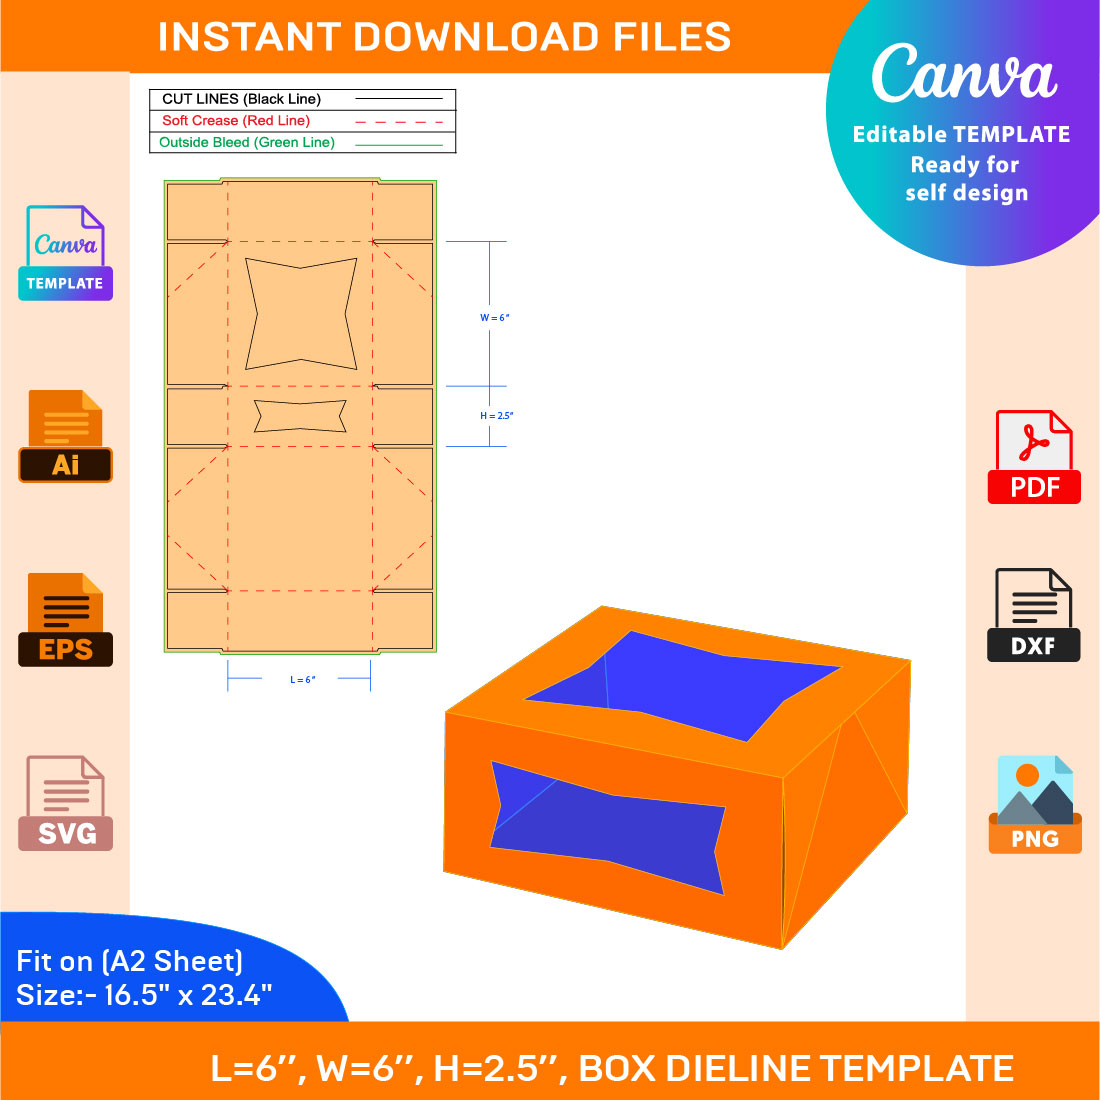 Pie Box, Dieline Template, SVG, EPS, PDF, DXF, Ai, PNG, JPEG cover image.